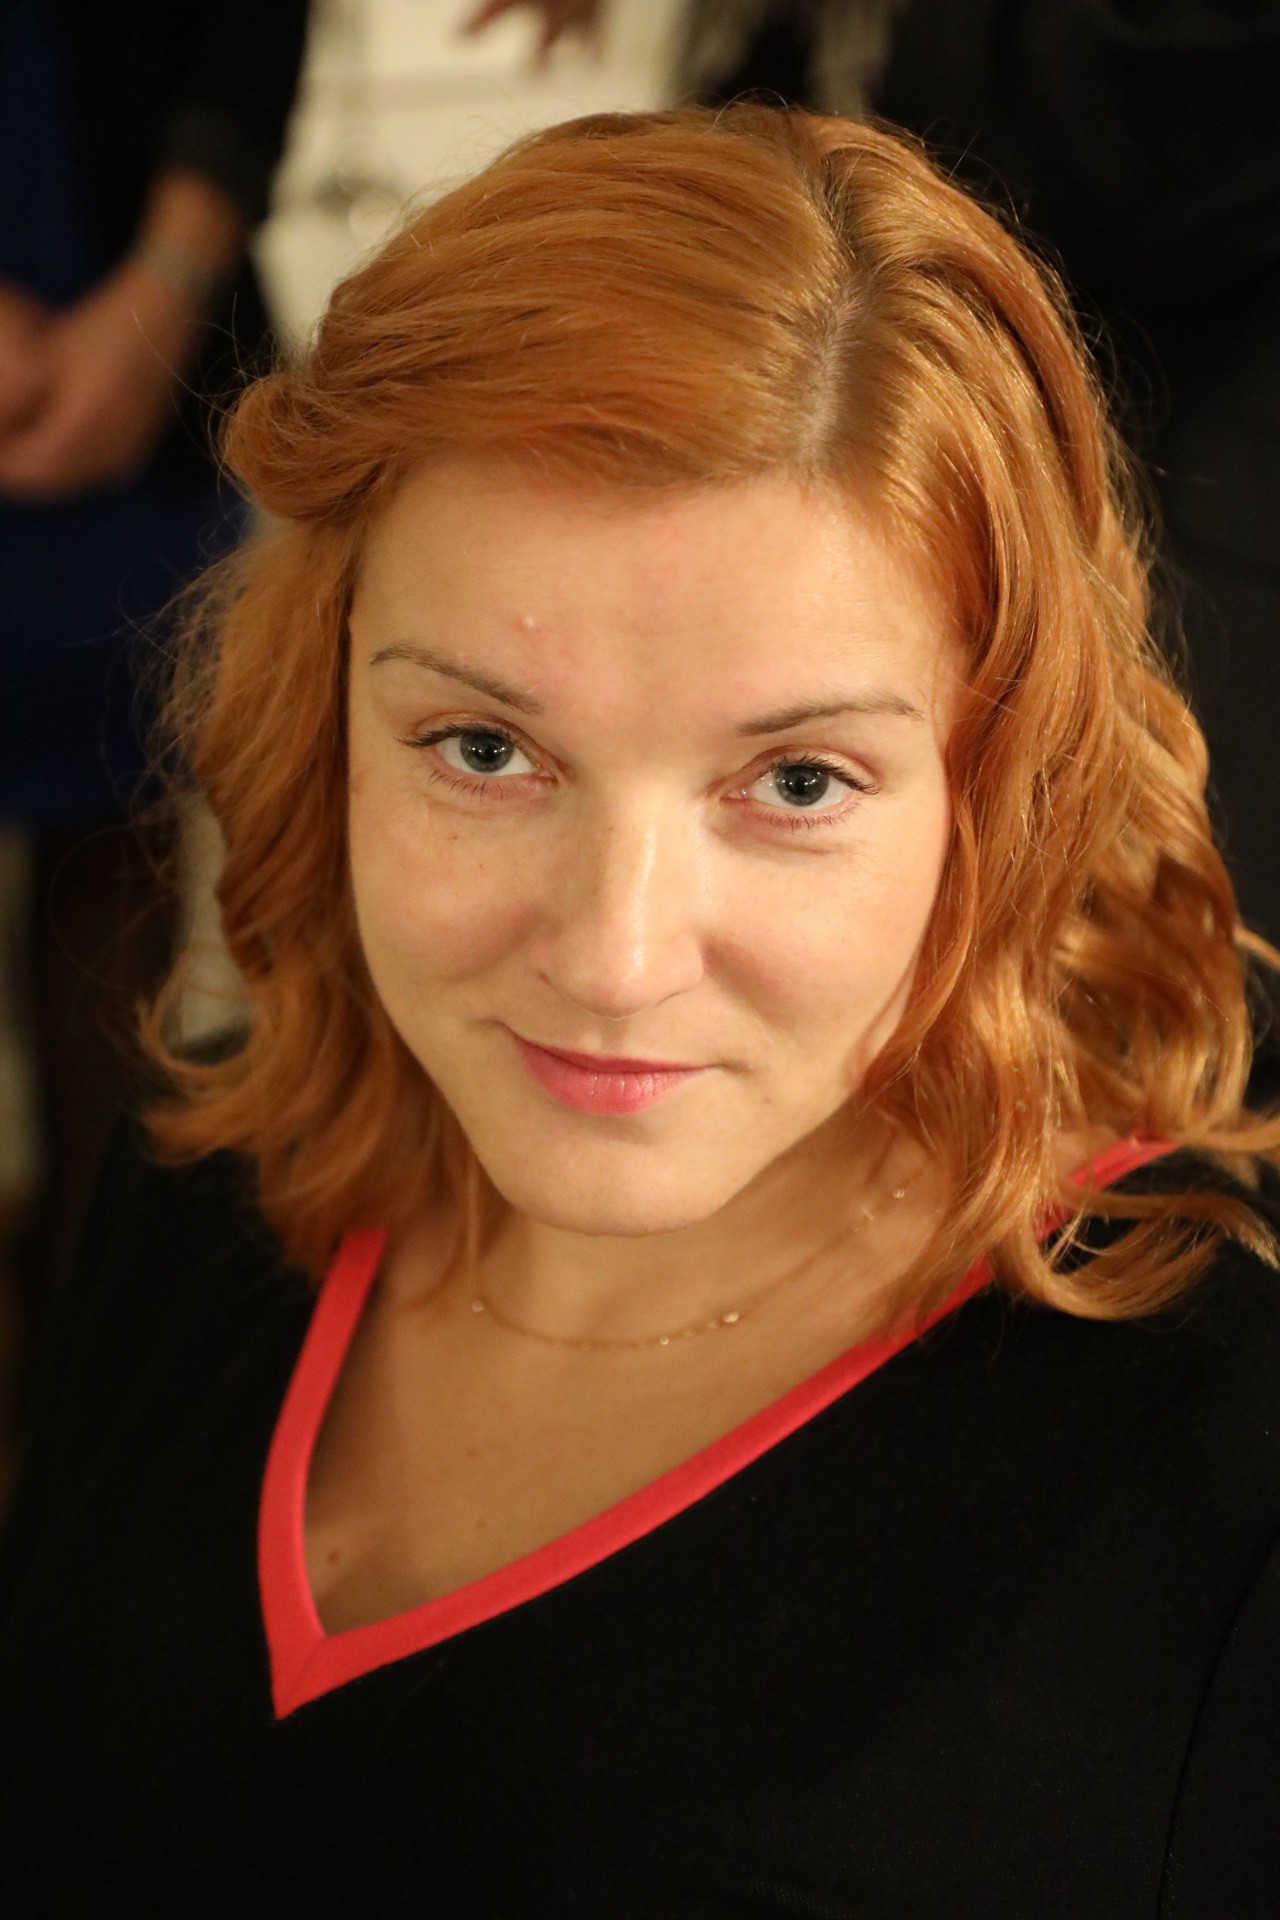 Profile picture for user Janika Veermäe